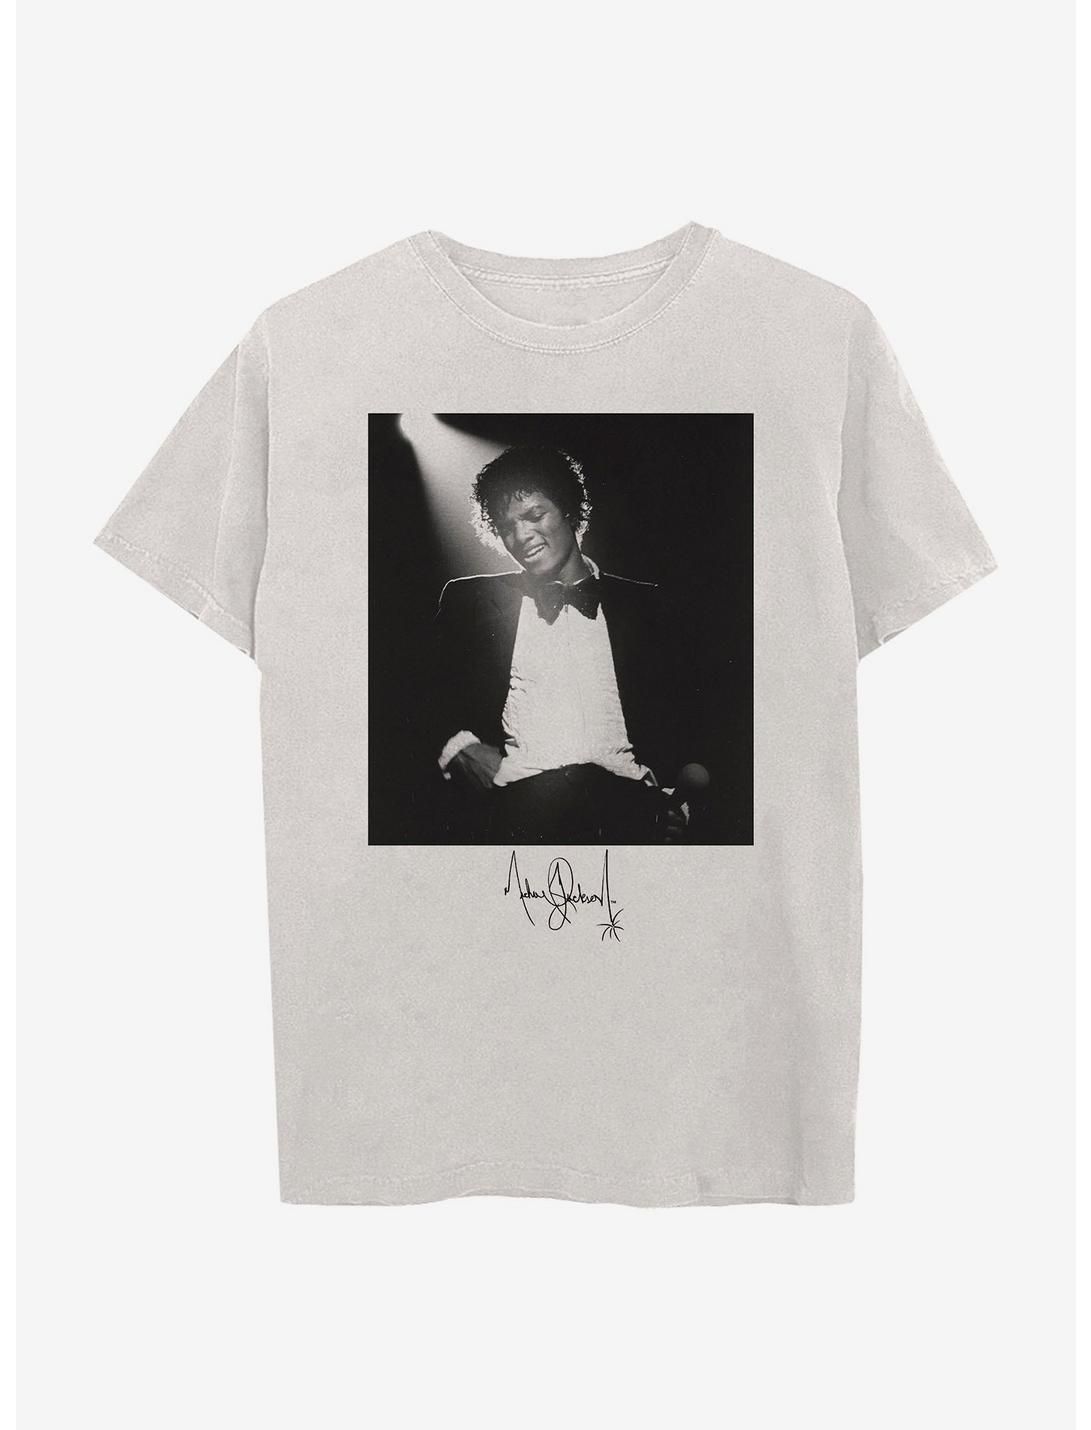 Michael Jackson Classic Portrait T-Shirt | Hot Topic